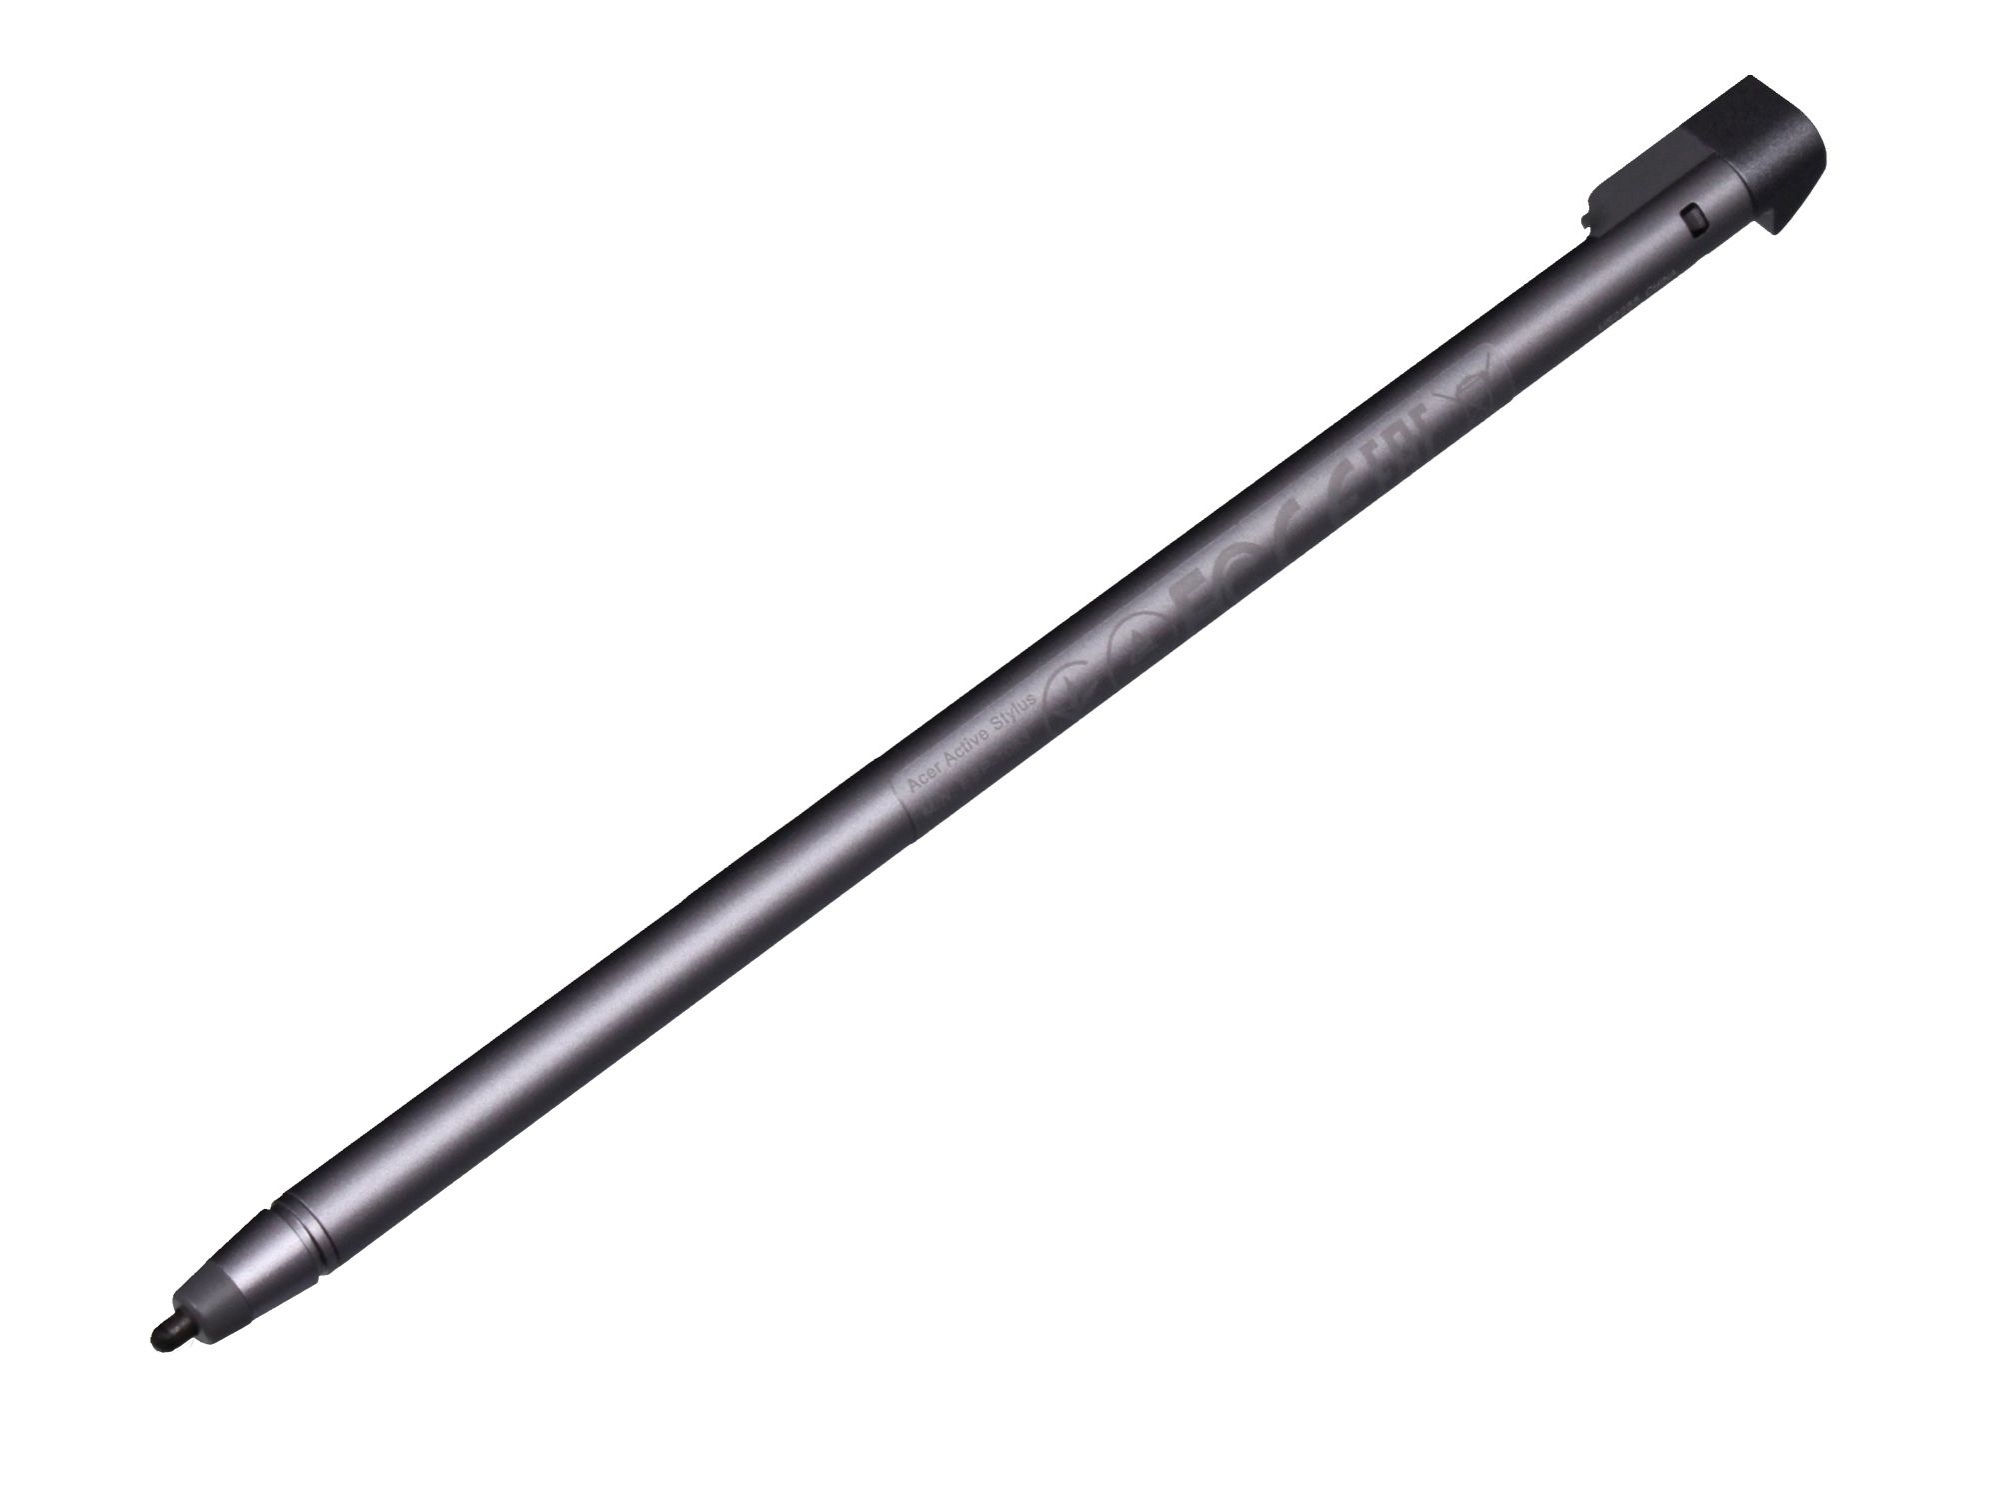 Acer ESP-110-88B-6 Stylus Pen